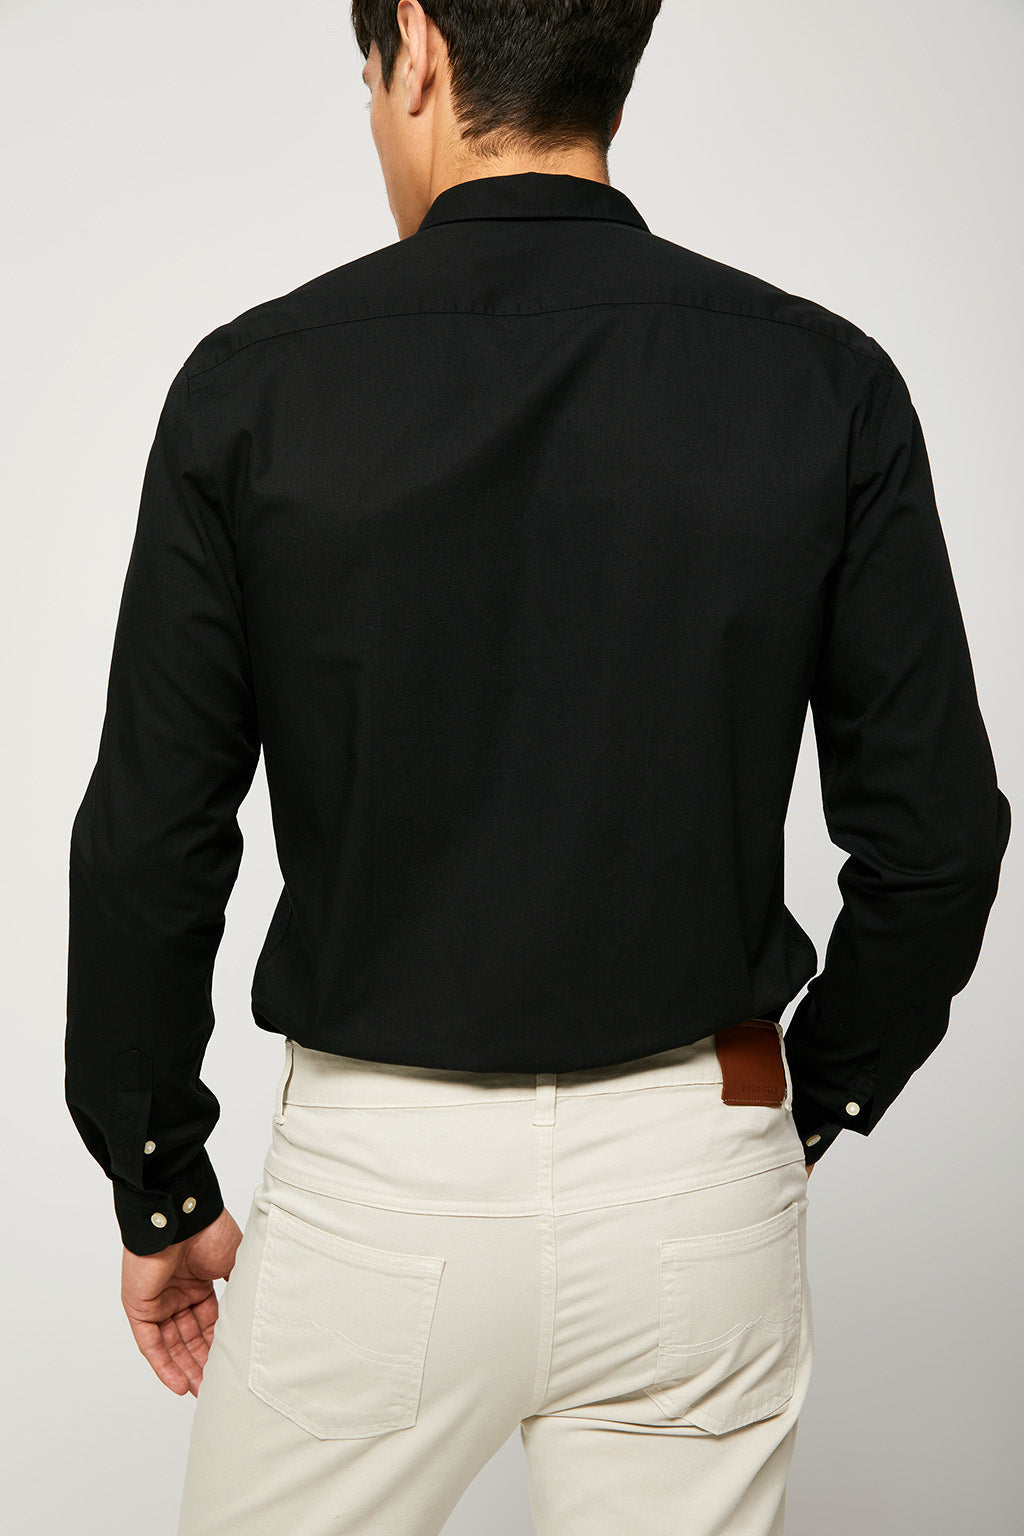 Pack de dos carmisas popelina blanca y negra con logo bordado a contraste | HOMBRE  | POLO CLUB